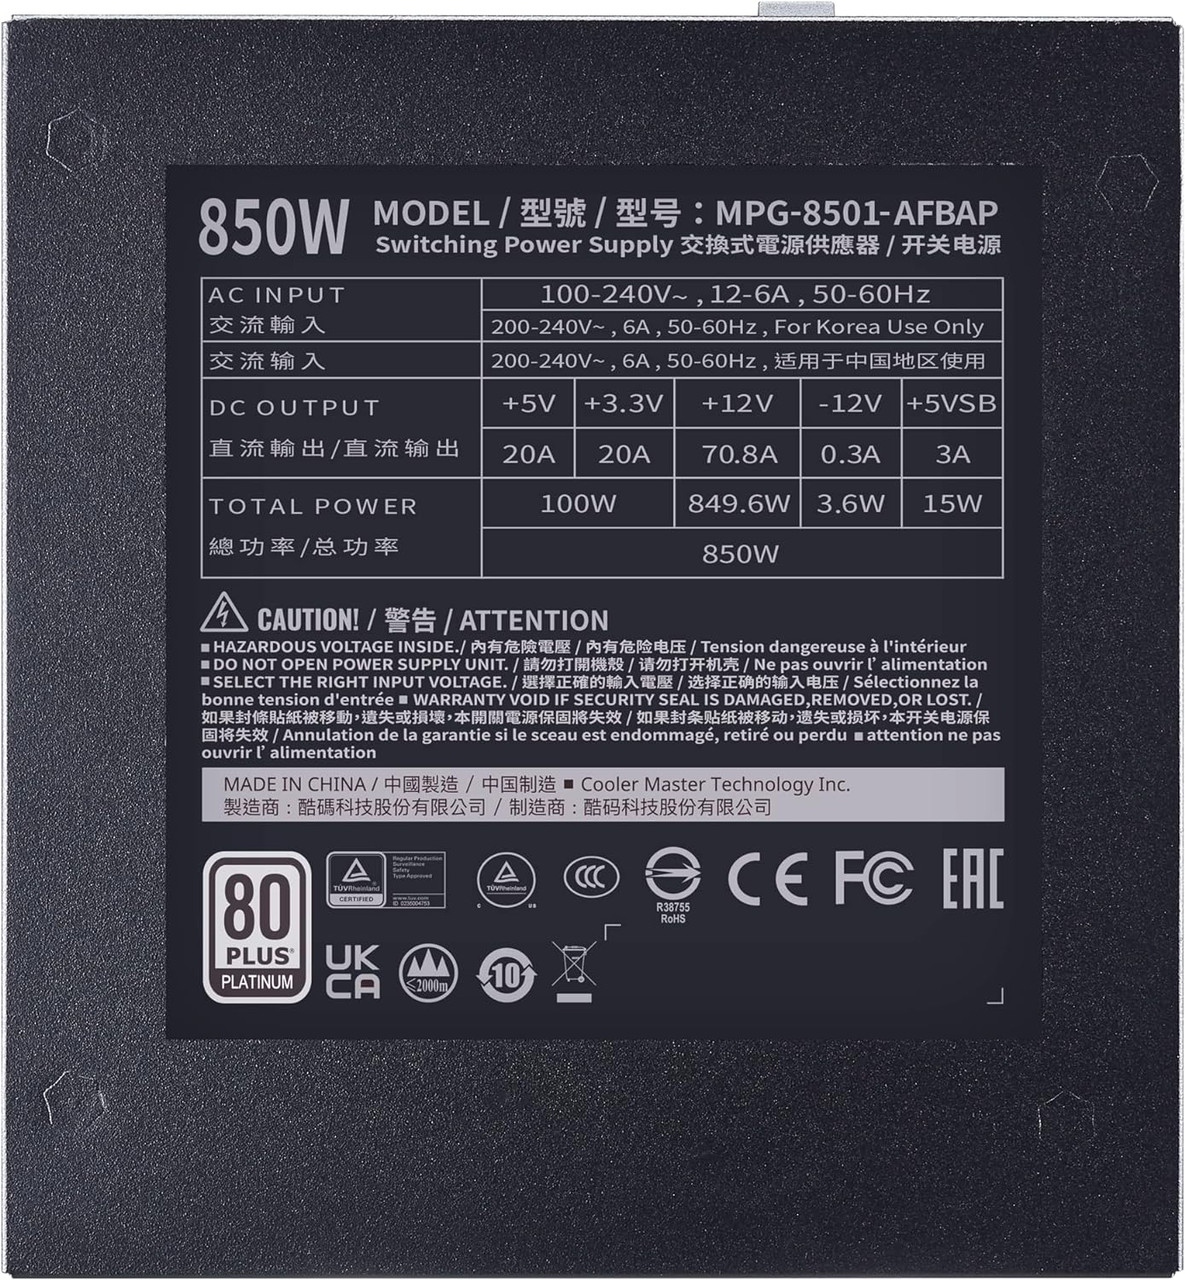 Cooler Master XG850 Plus Platinum ARGB Fully Modular, PSU 850W, ATX 12V Ver 2.53,100% Japanese Capacitors MPG-8501-AFBAP-XUS